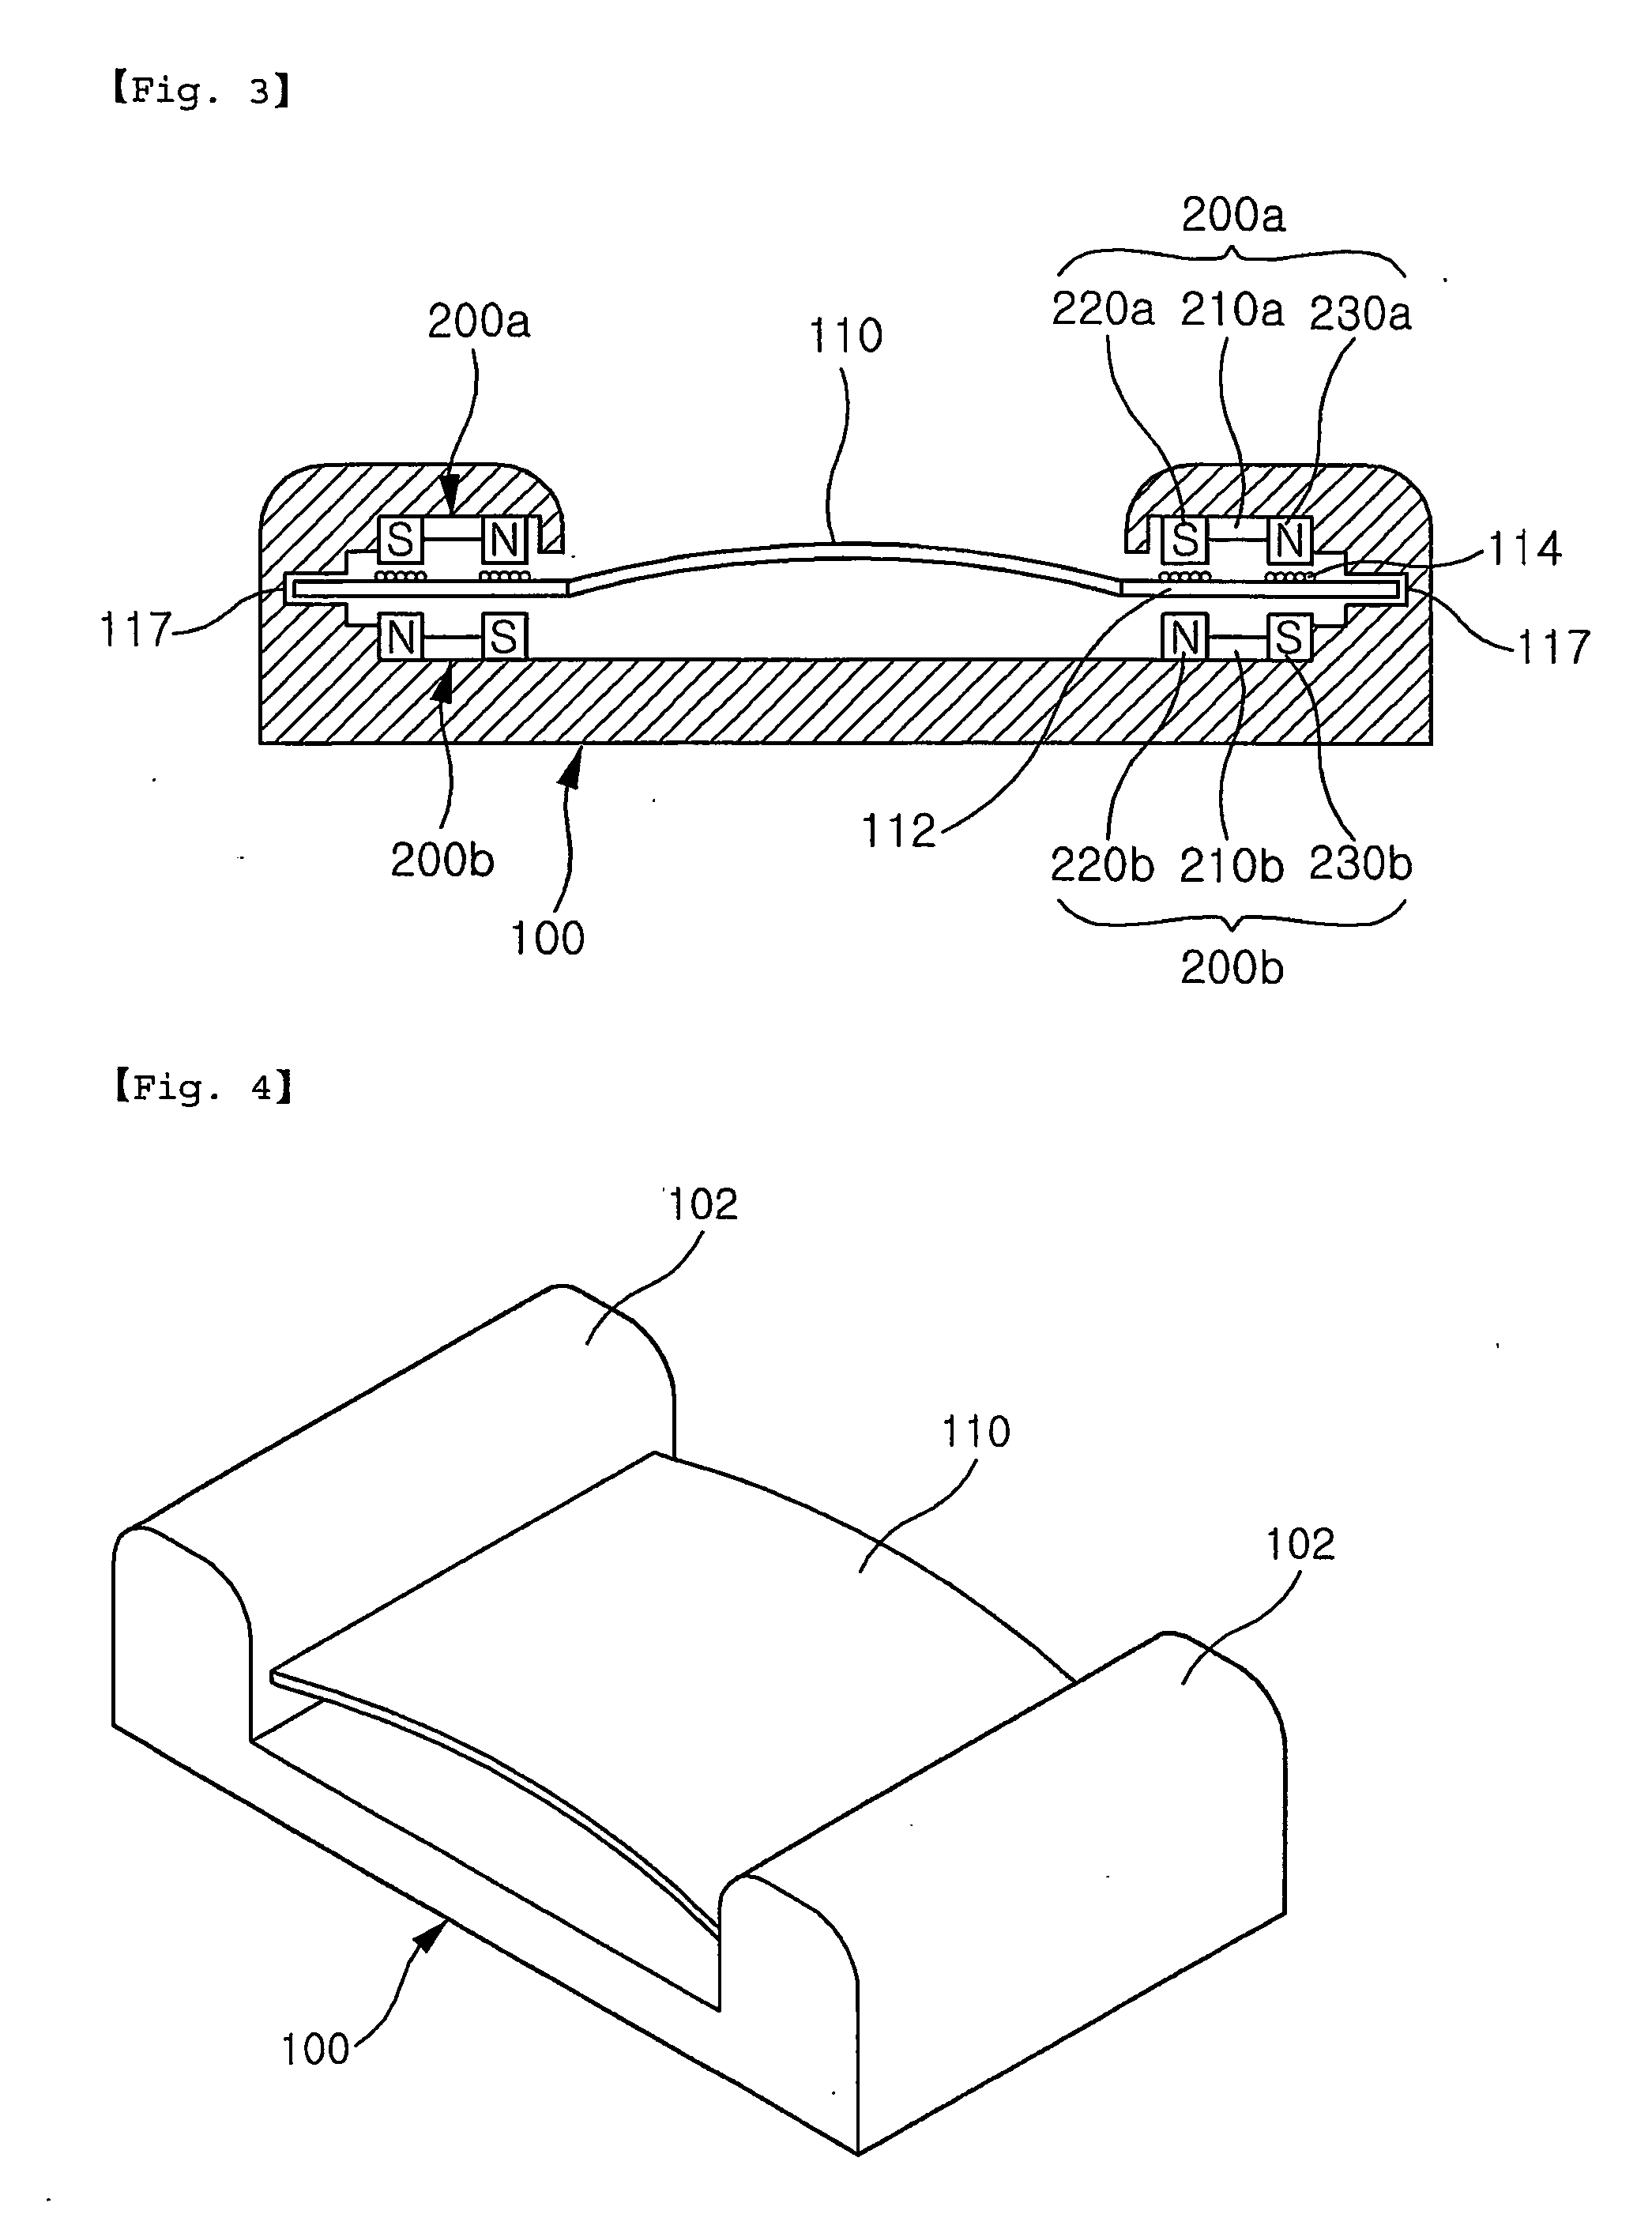 Plate type speaker using horizontal vibration voice coil